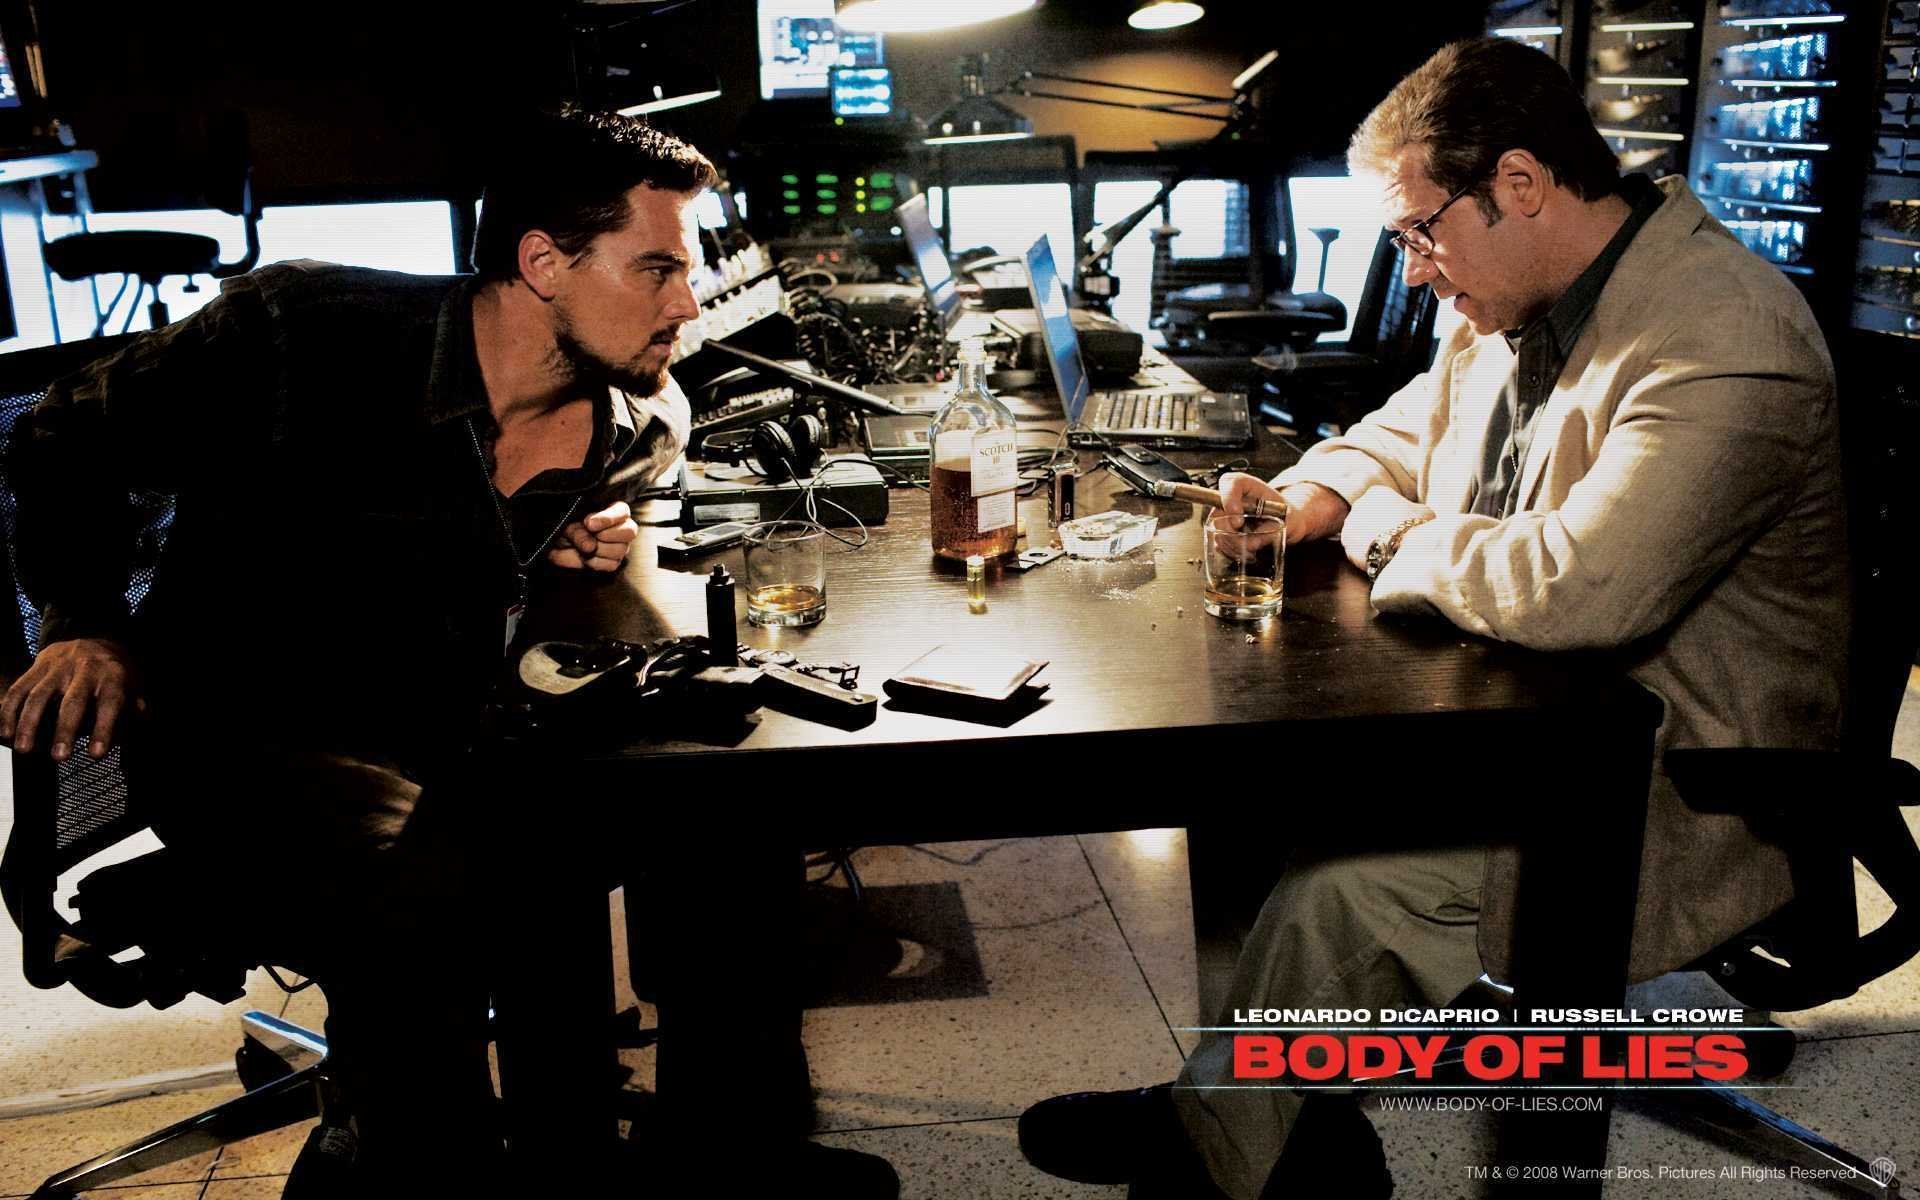 BODY OF LIES action drama thriller spy crime dicaprio wallpaperx1200